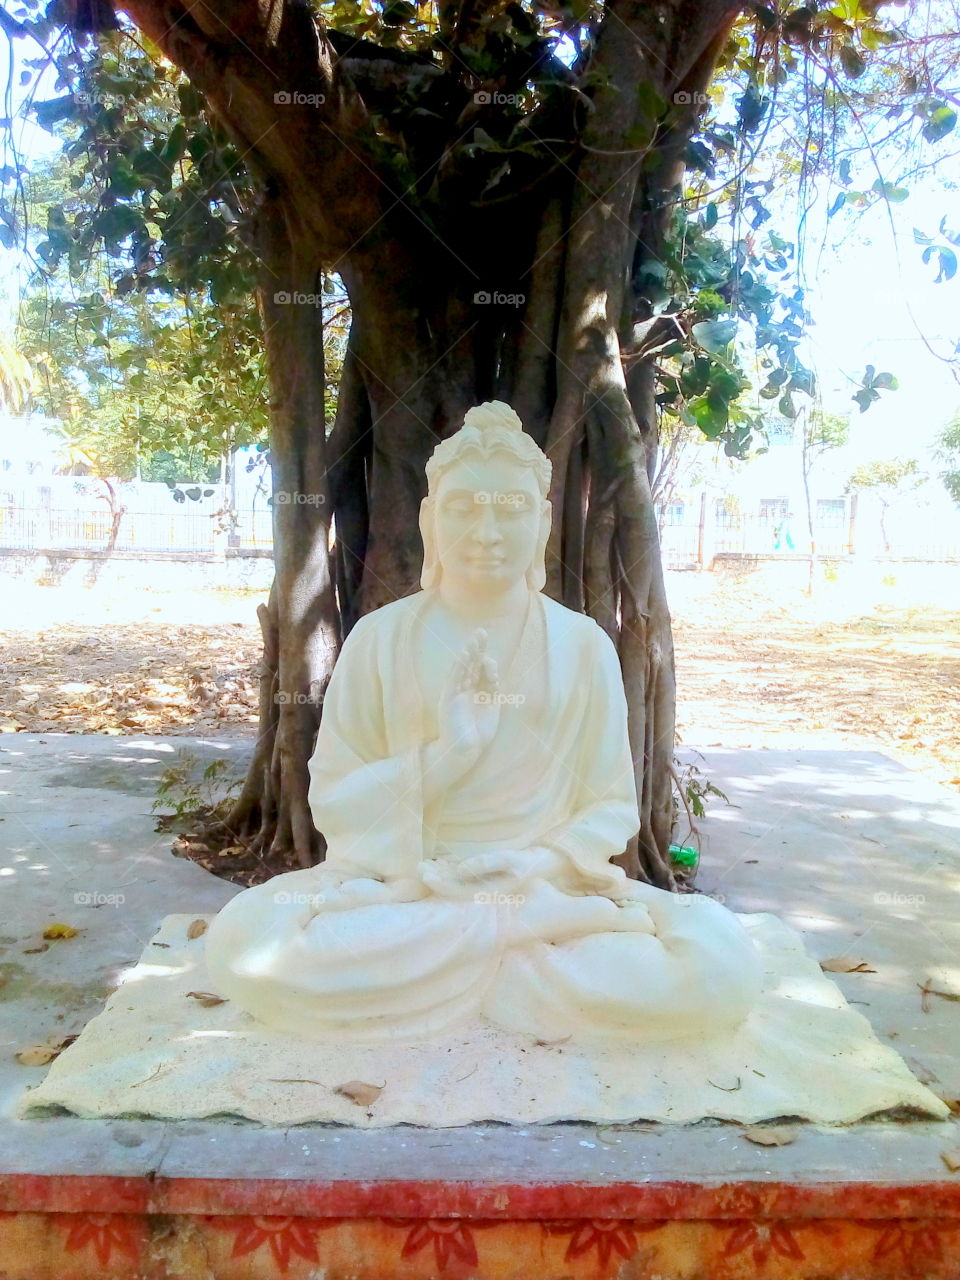 butter Lord Buddha statue